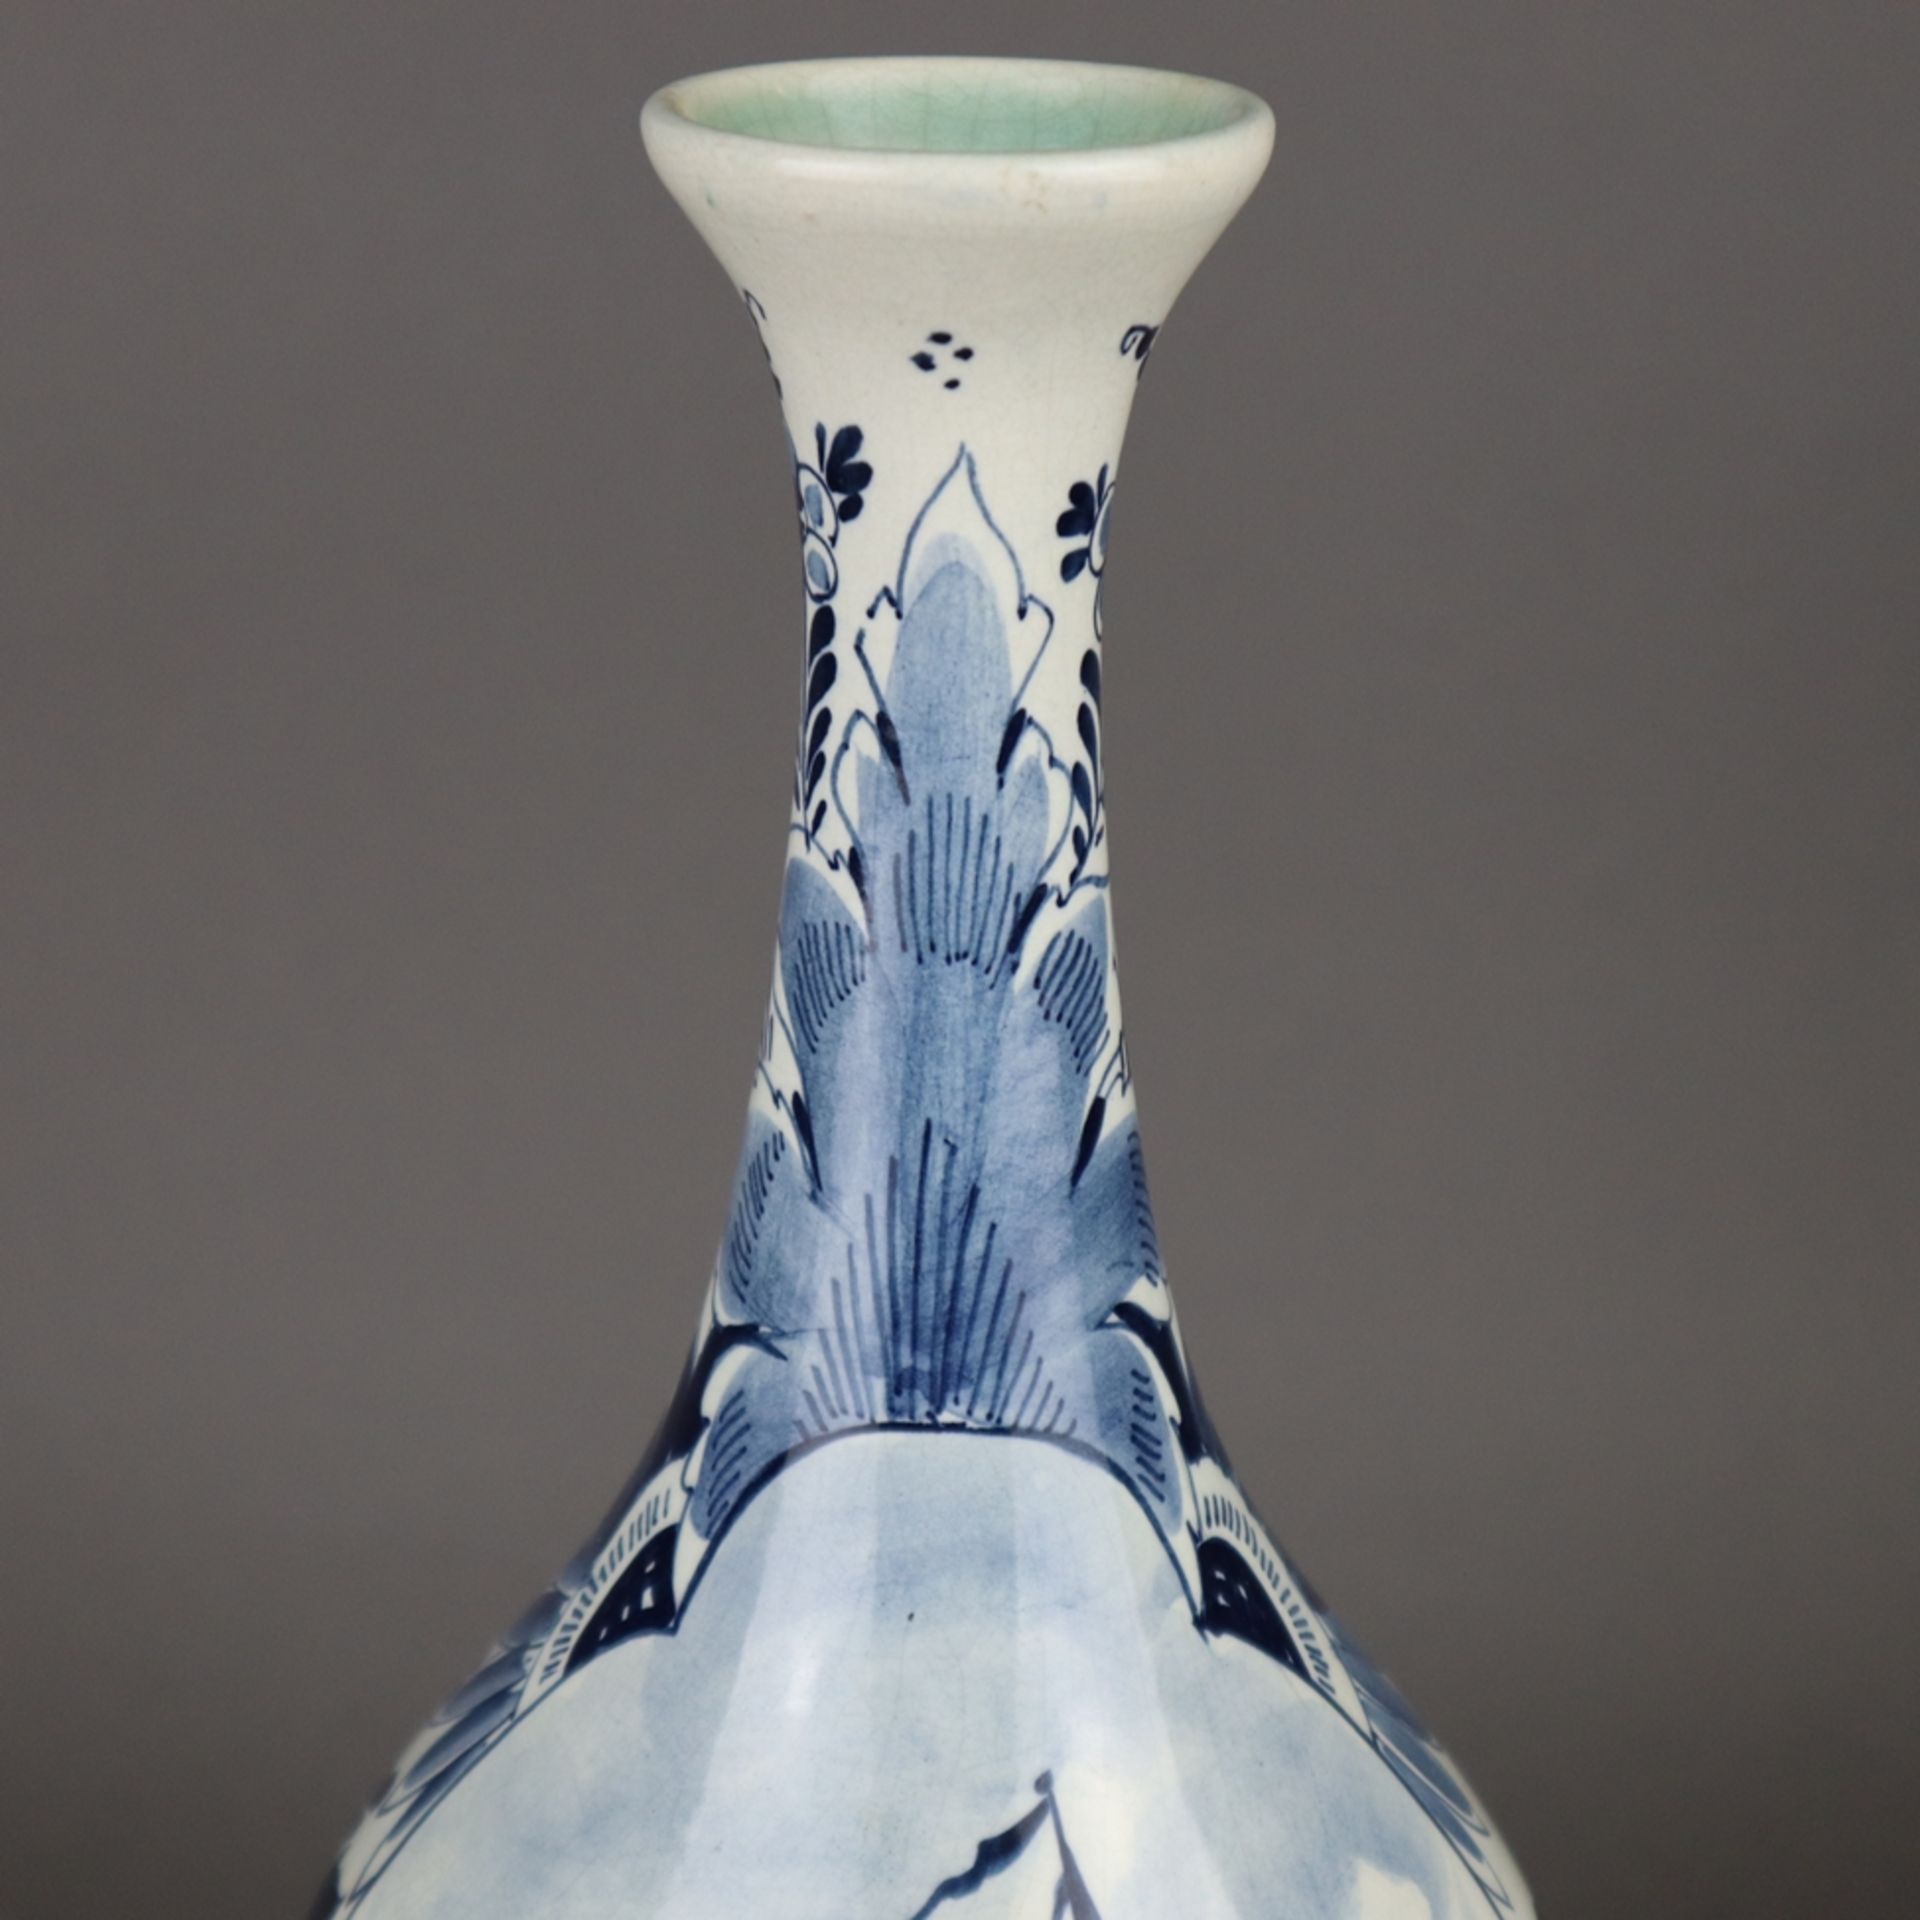 Vase - Delft, Keramik, feine Blaumalerei, Medaillon mit Segelboot, Blumendekor, Unterseite - Bild 3 aus 6